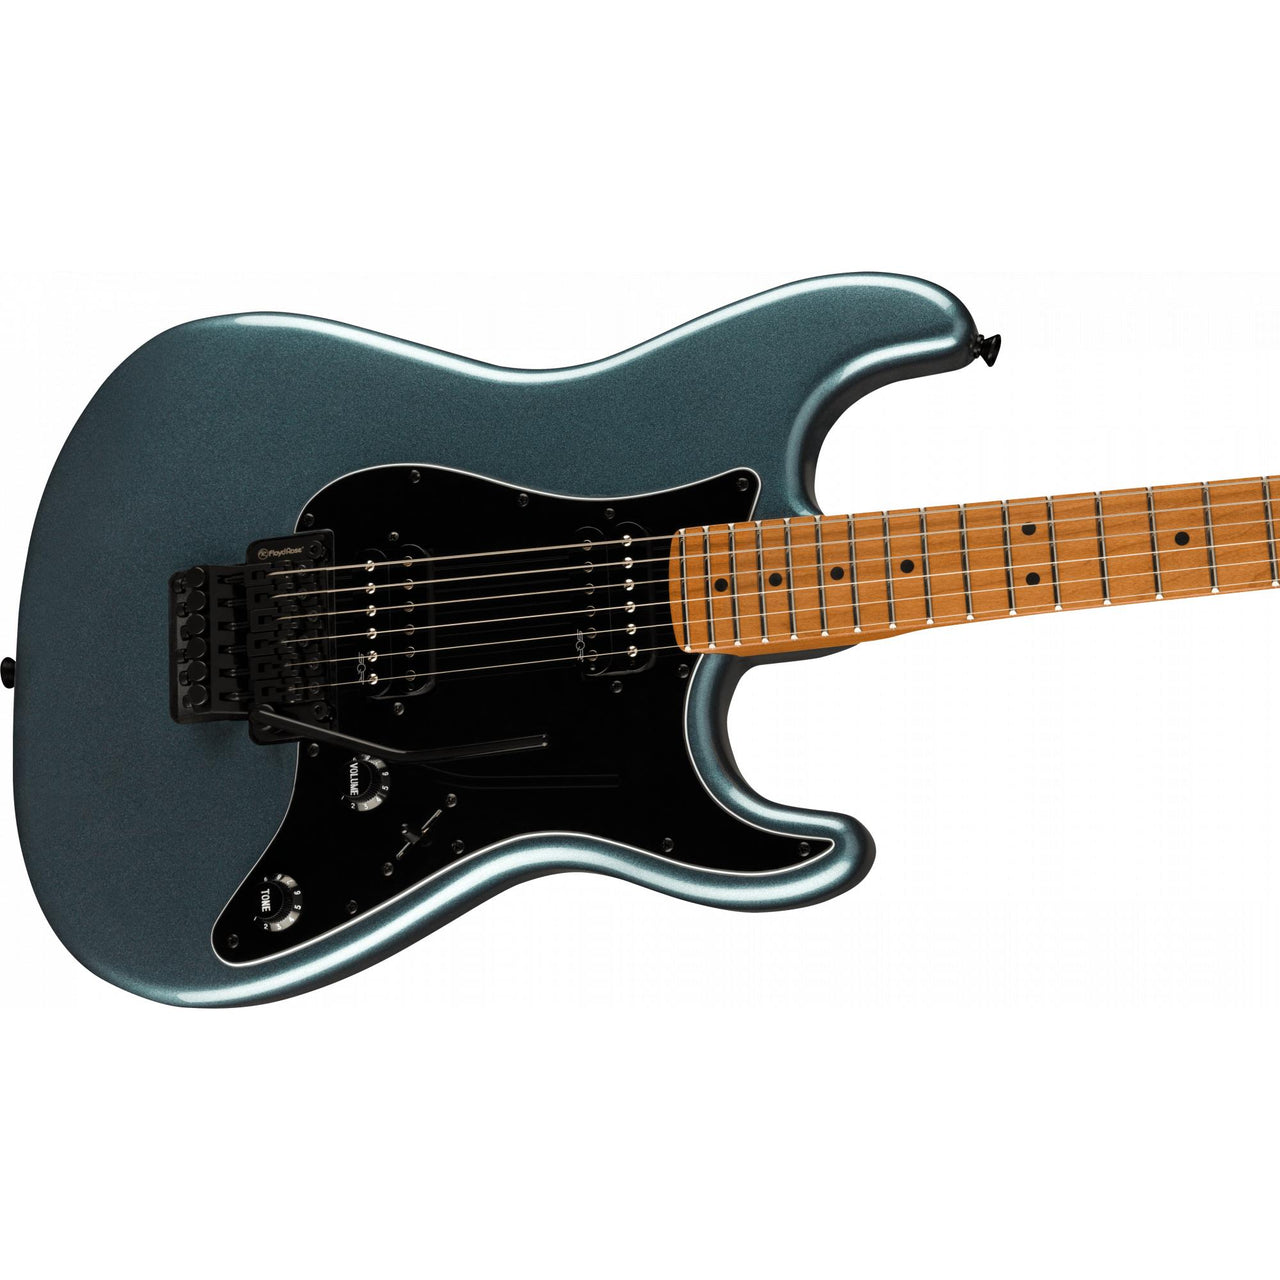 Guitarra Fender Contemporary Stratocaster Hh Fr Electrica Bronce Metálico 0370240568